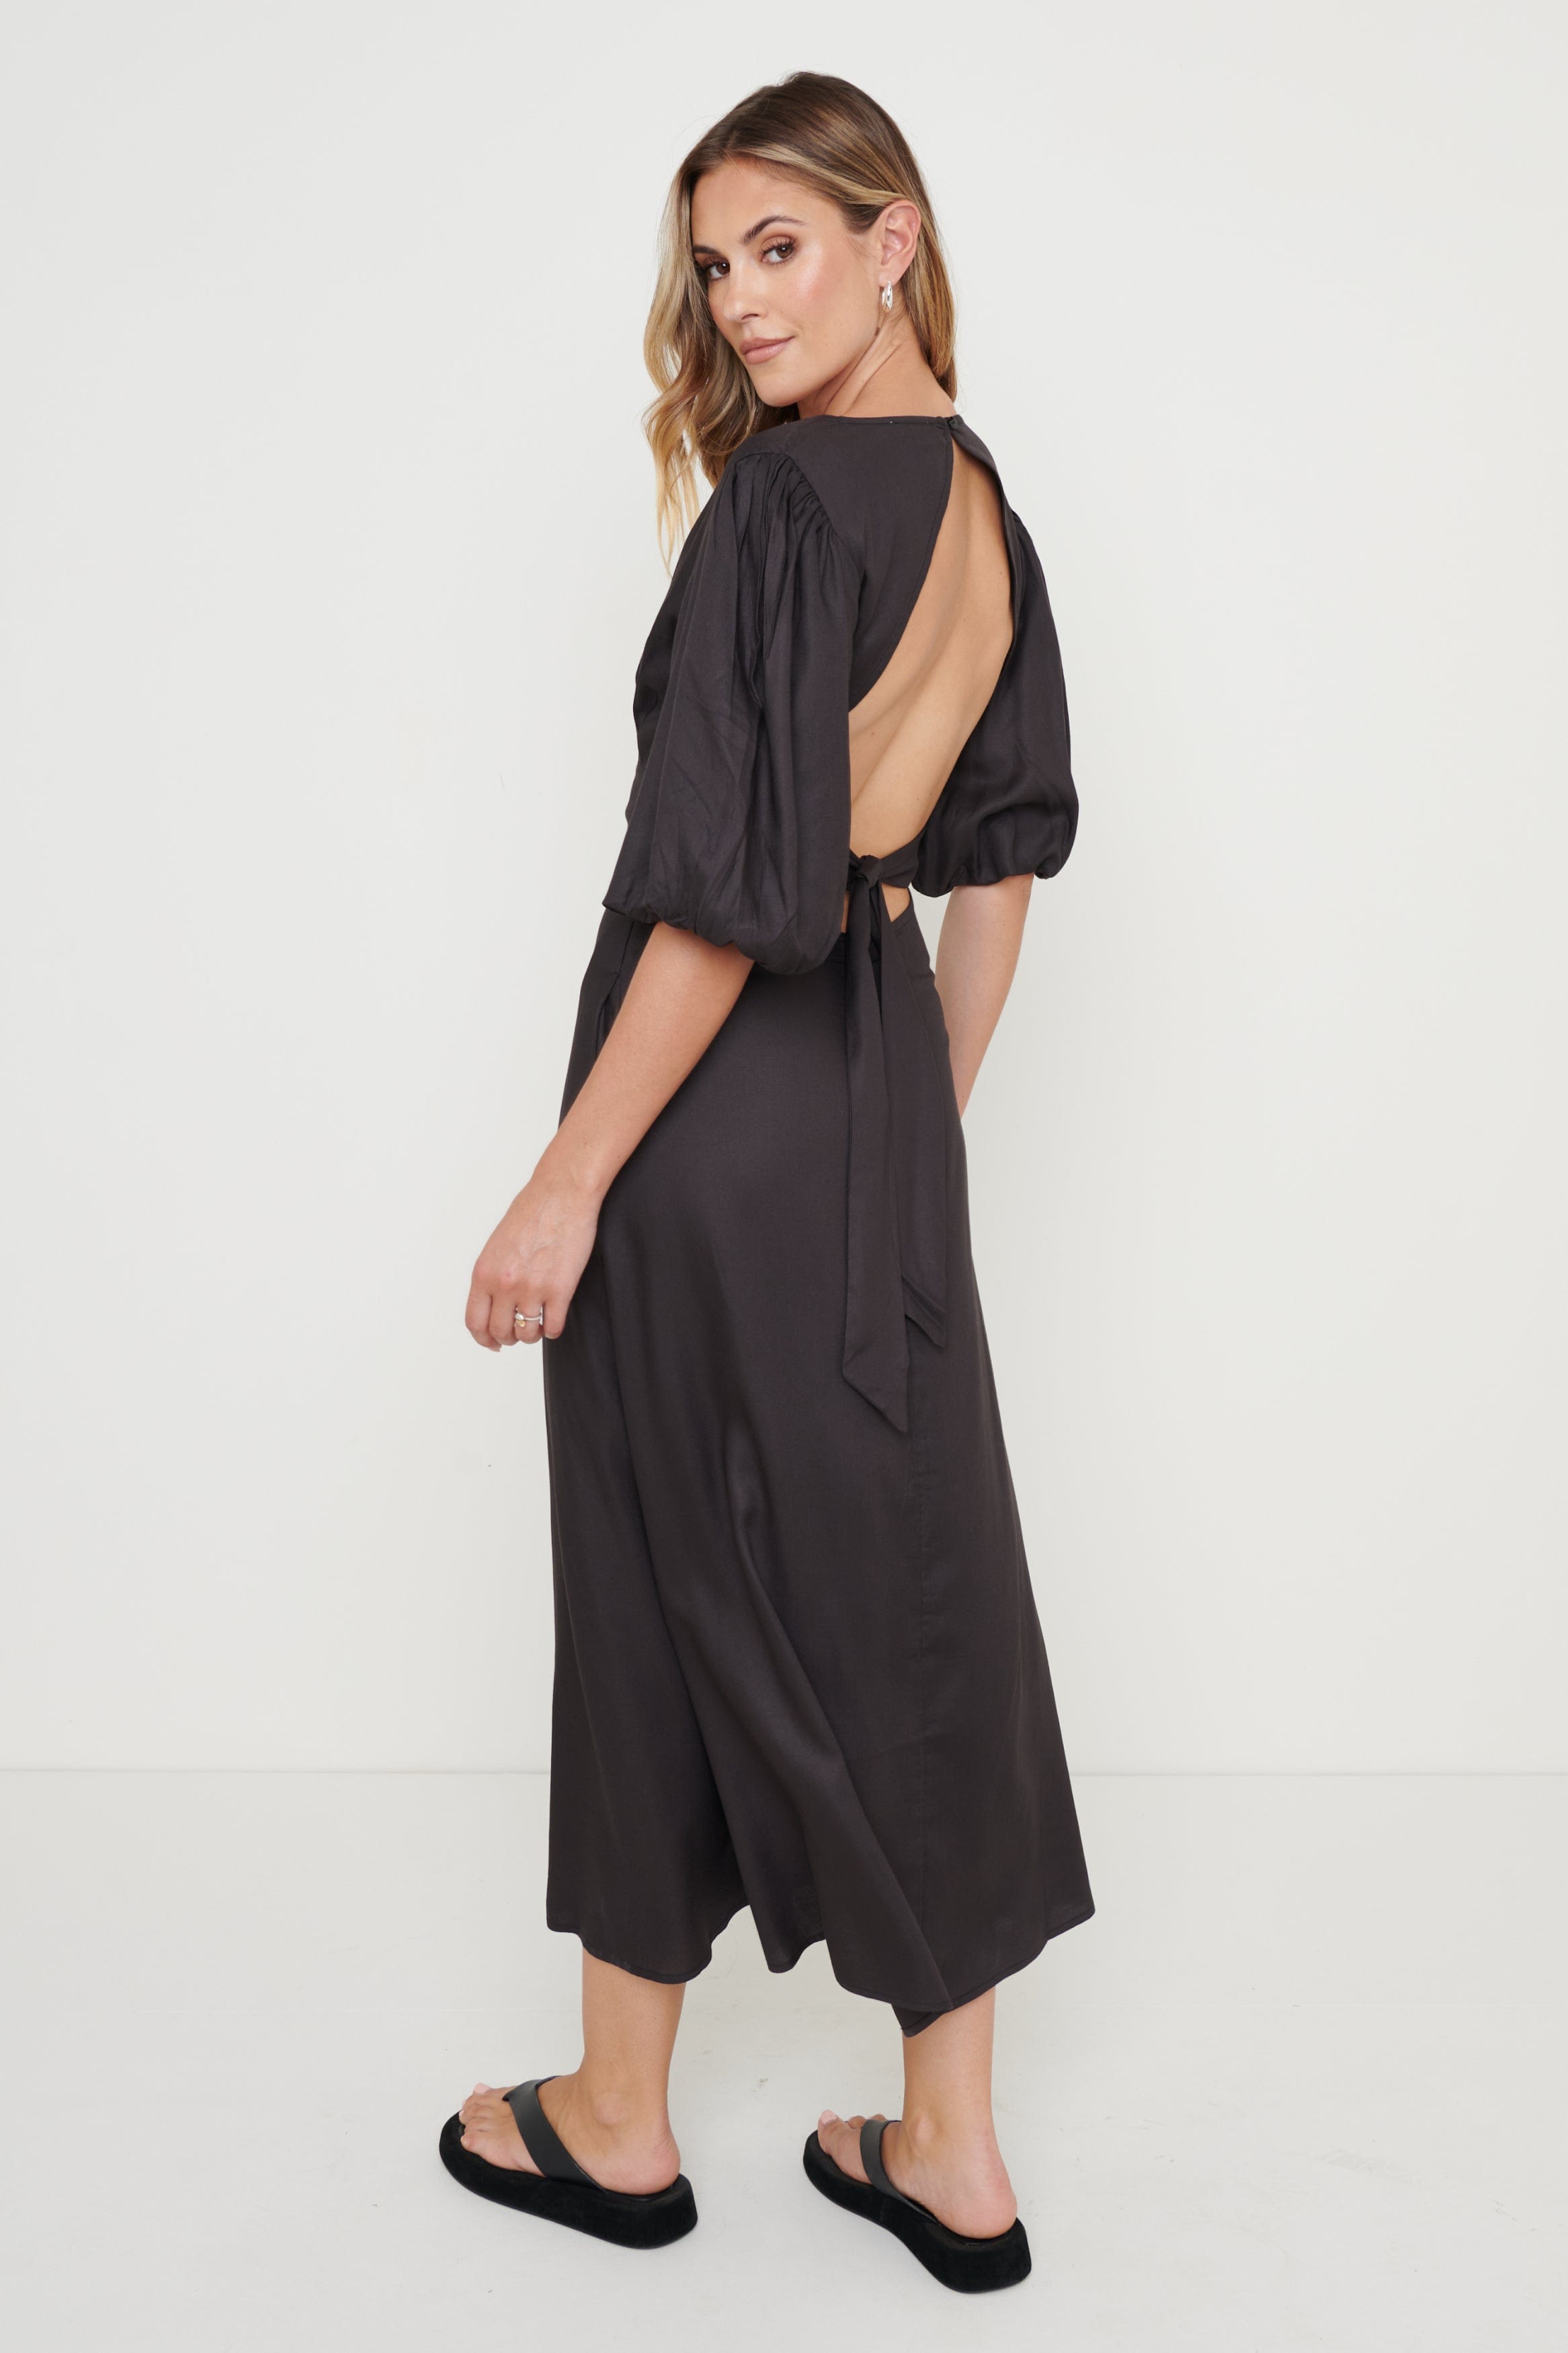 Jeanelle Puff Sleeve Backless Dress - Black, 8